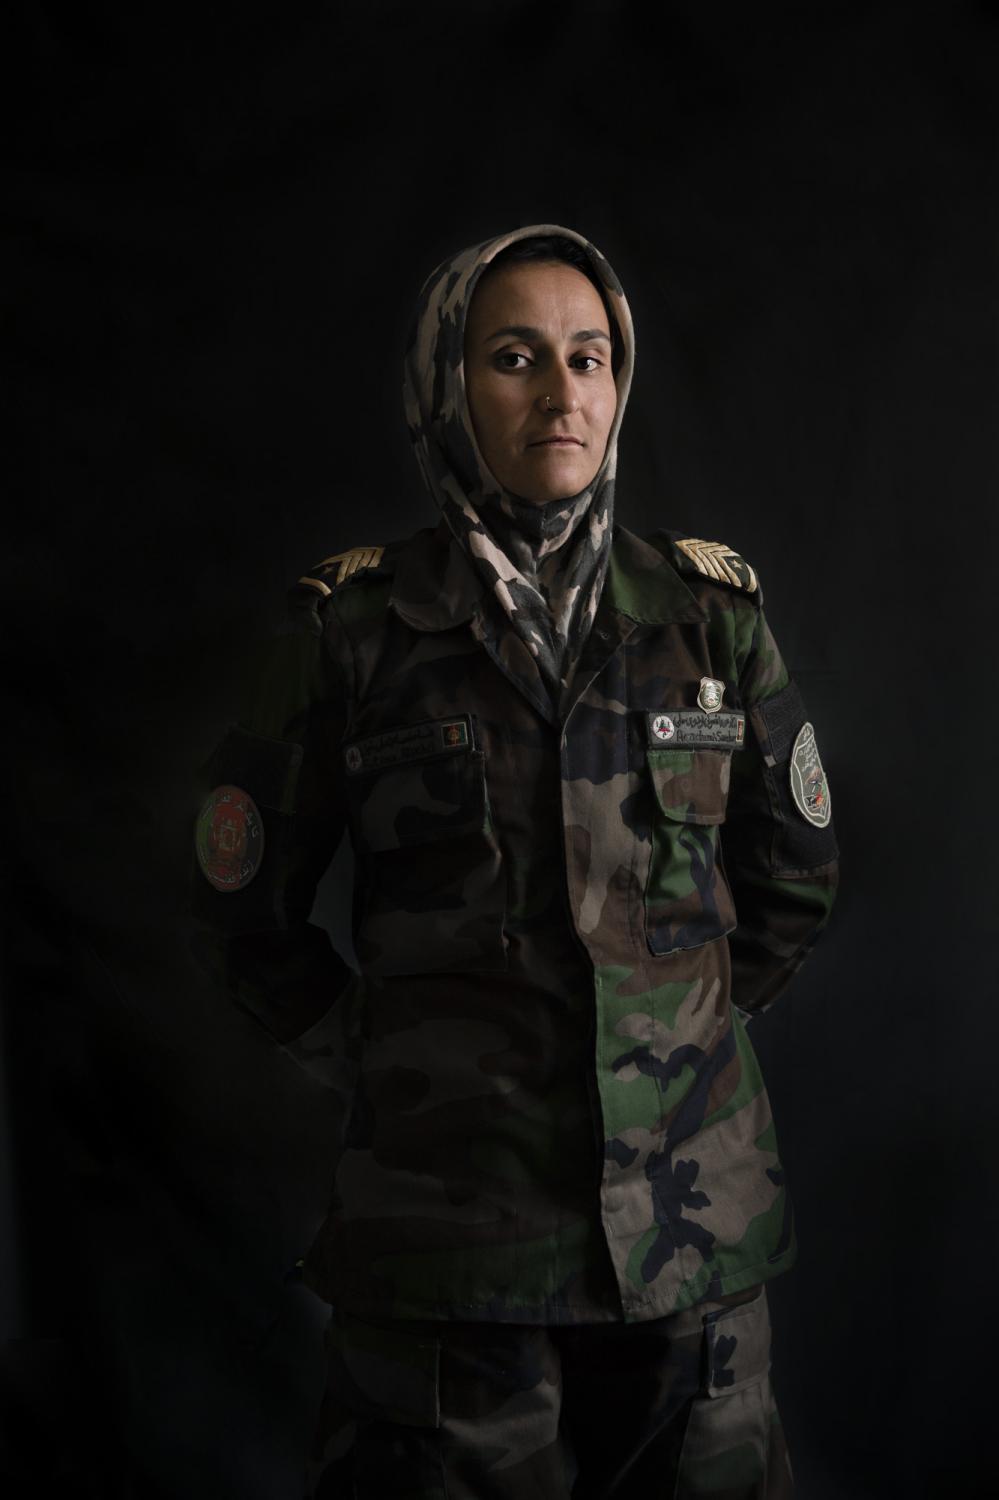 Afghan Women On The Frontline